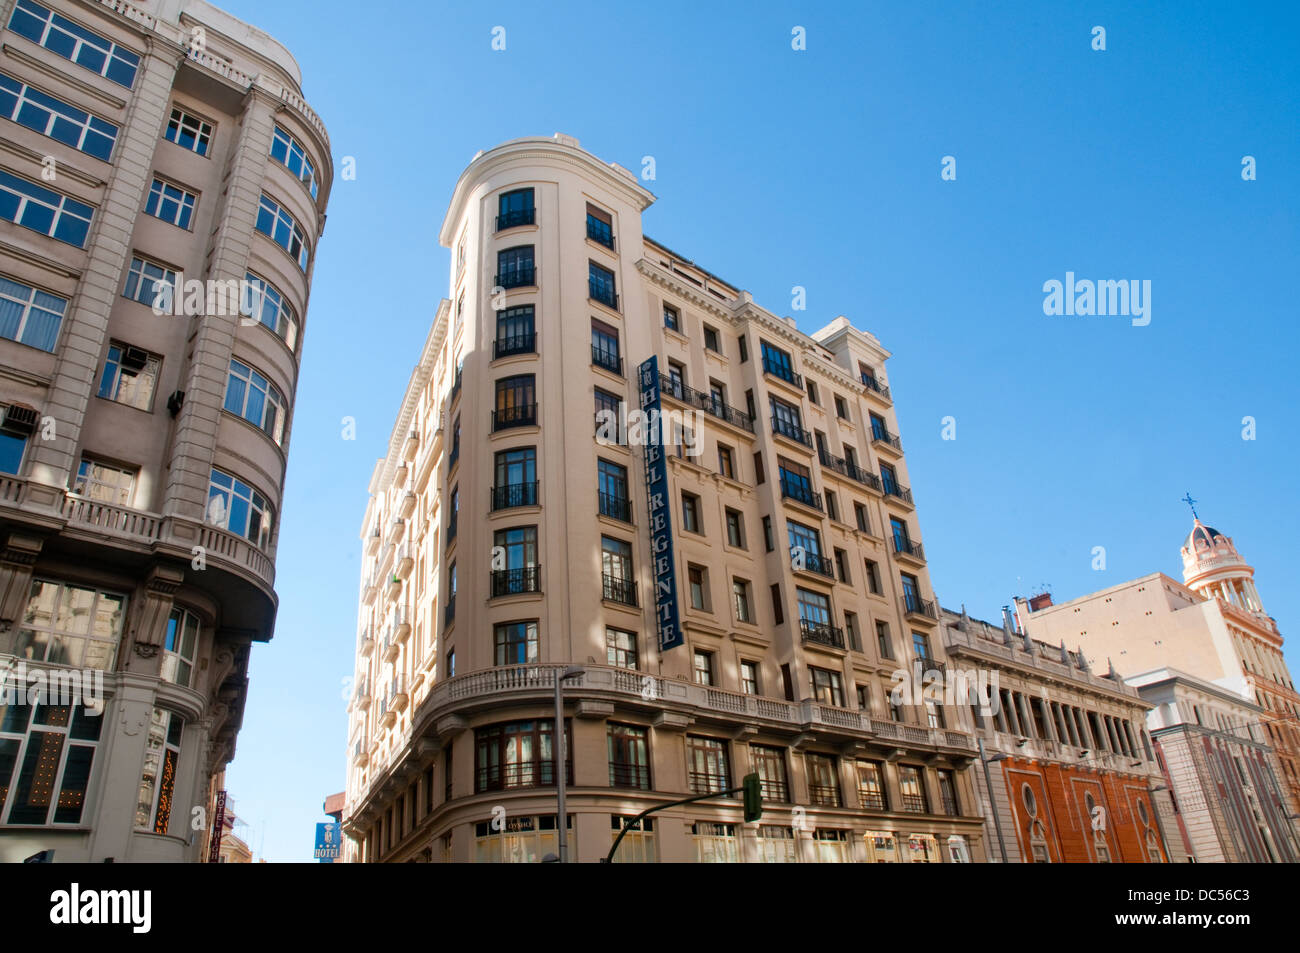 Facade of Regente Hotel building. Gran Via, Madrid, Spain. Stock Photo